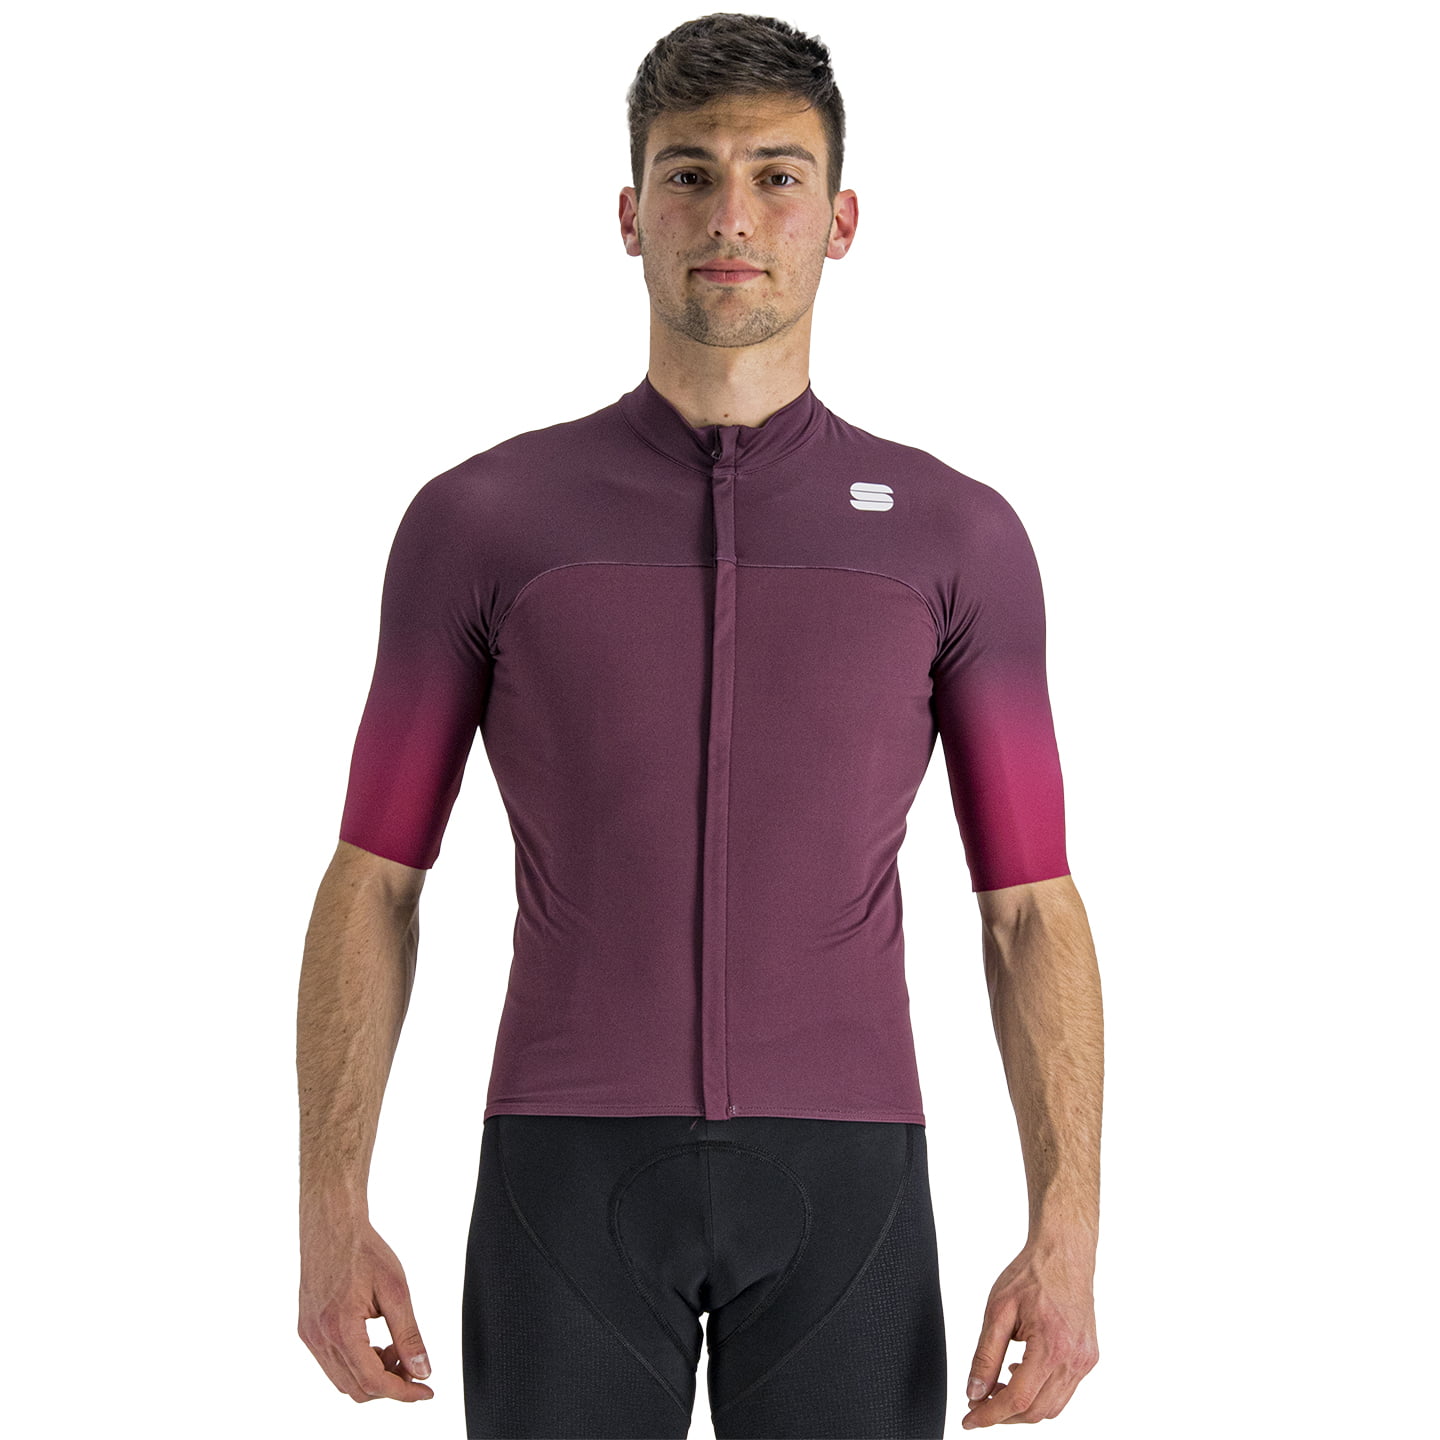 SPORTFUL Midseason Pro Short Sleeve Jersey Short Sleeve Jersey, for men, size XL, Cycling jersey, Cycle clothing